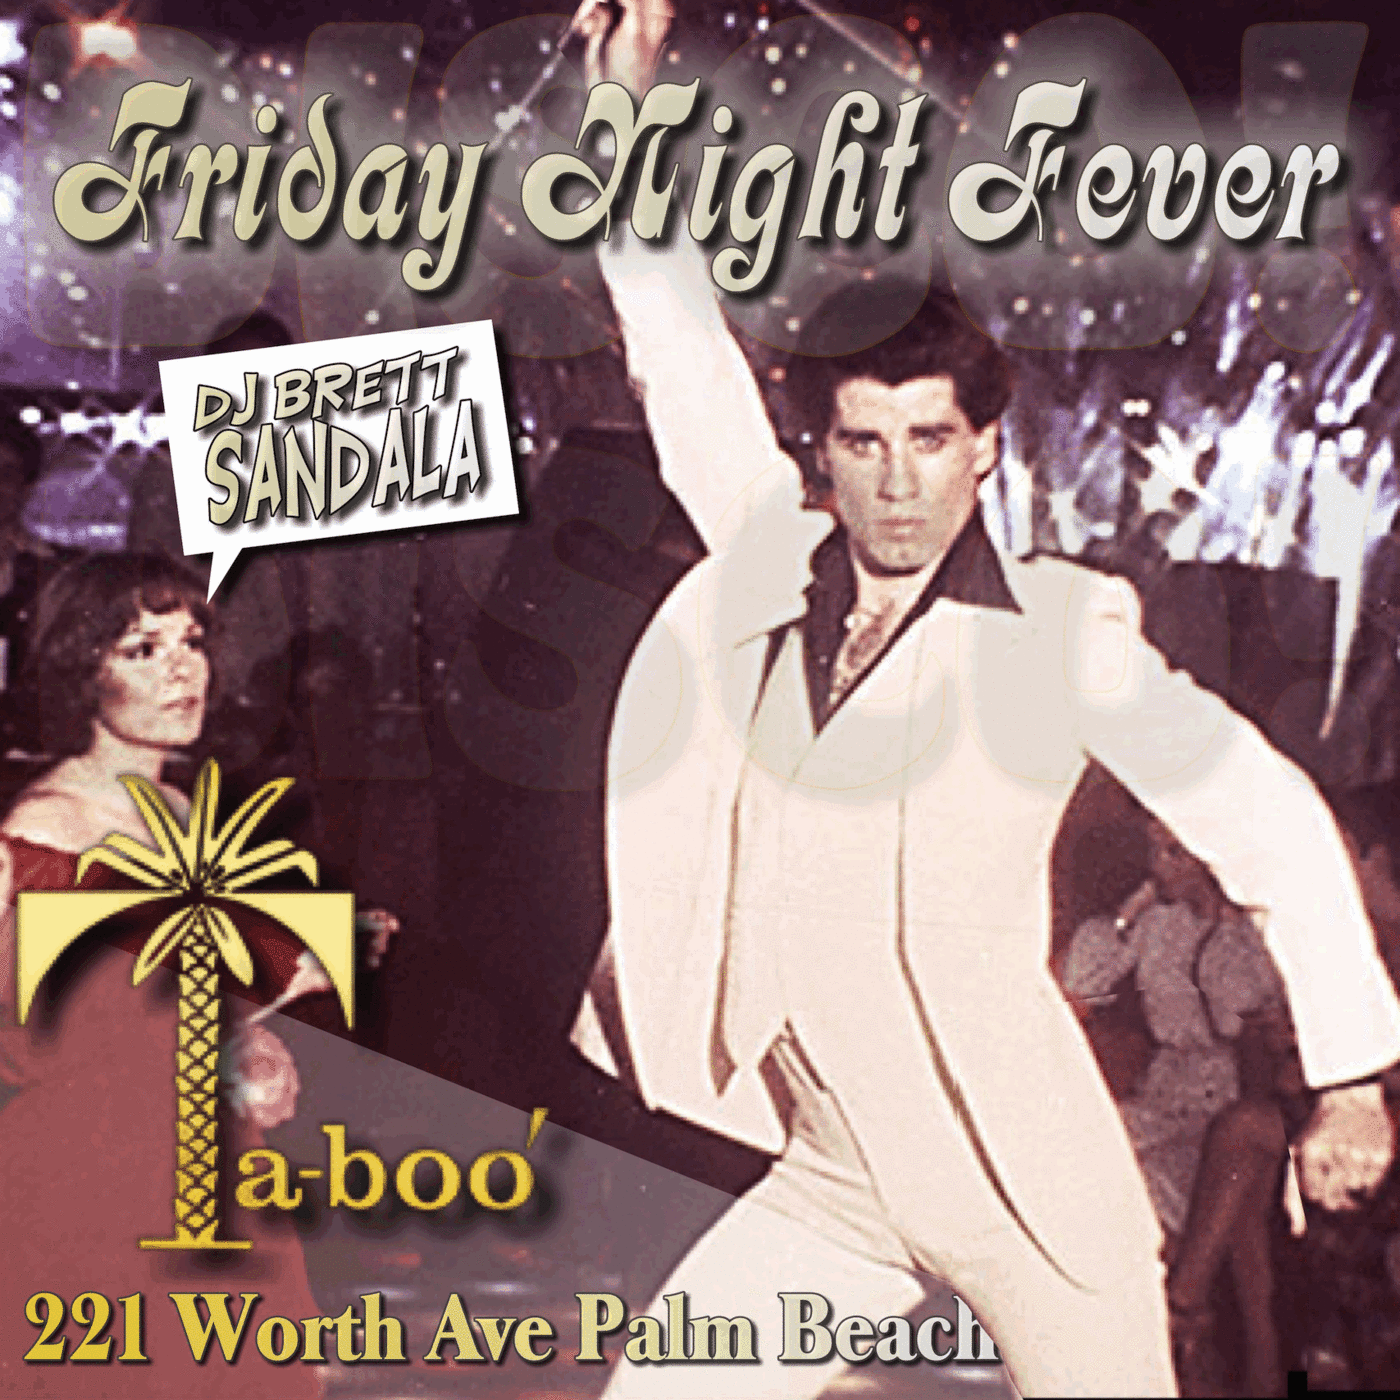 Friday Night Fever @ Ta-boo Palm Beach